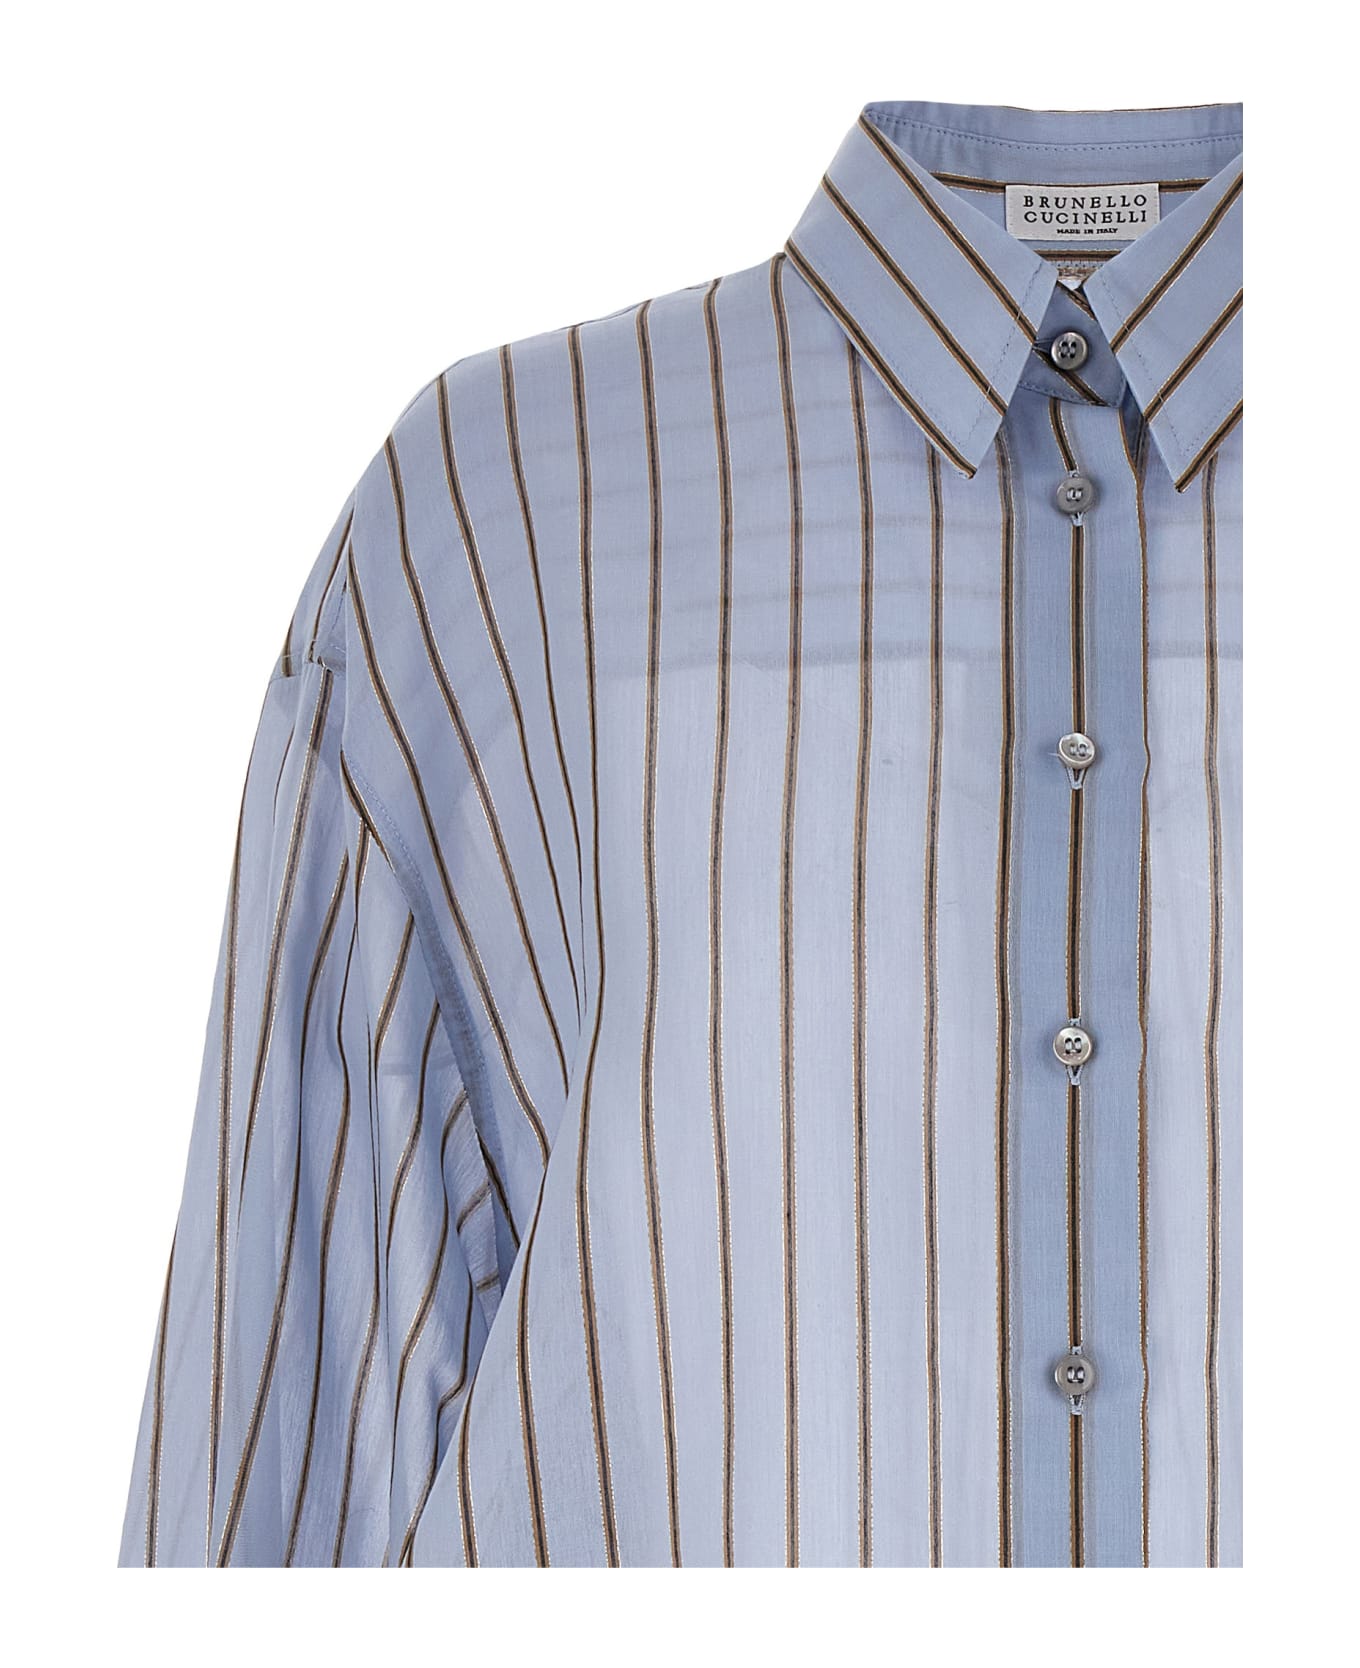 Brunello Cucinelli Striped Shirt - Light Blue